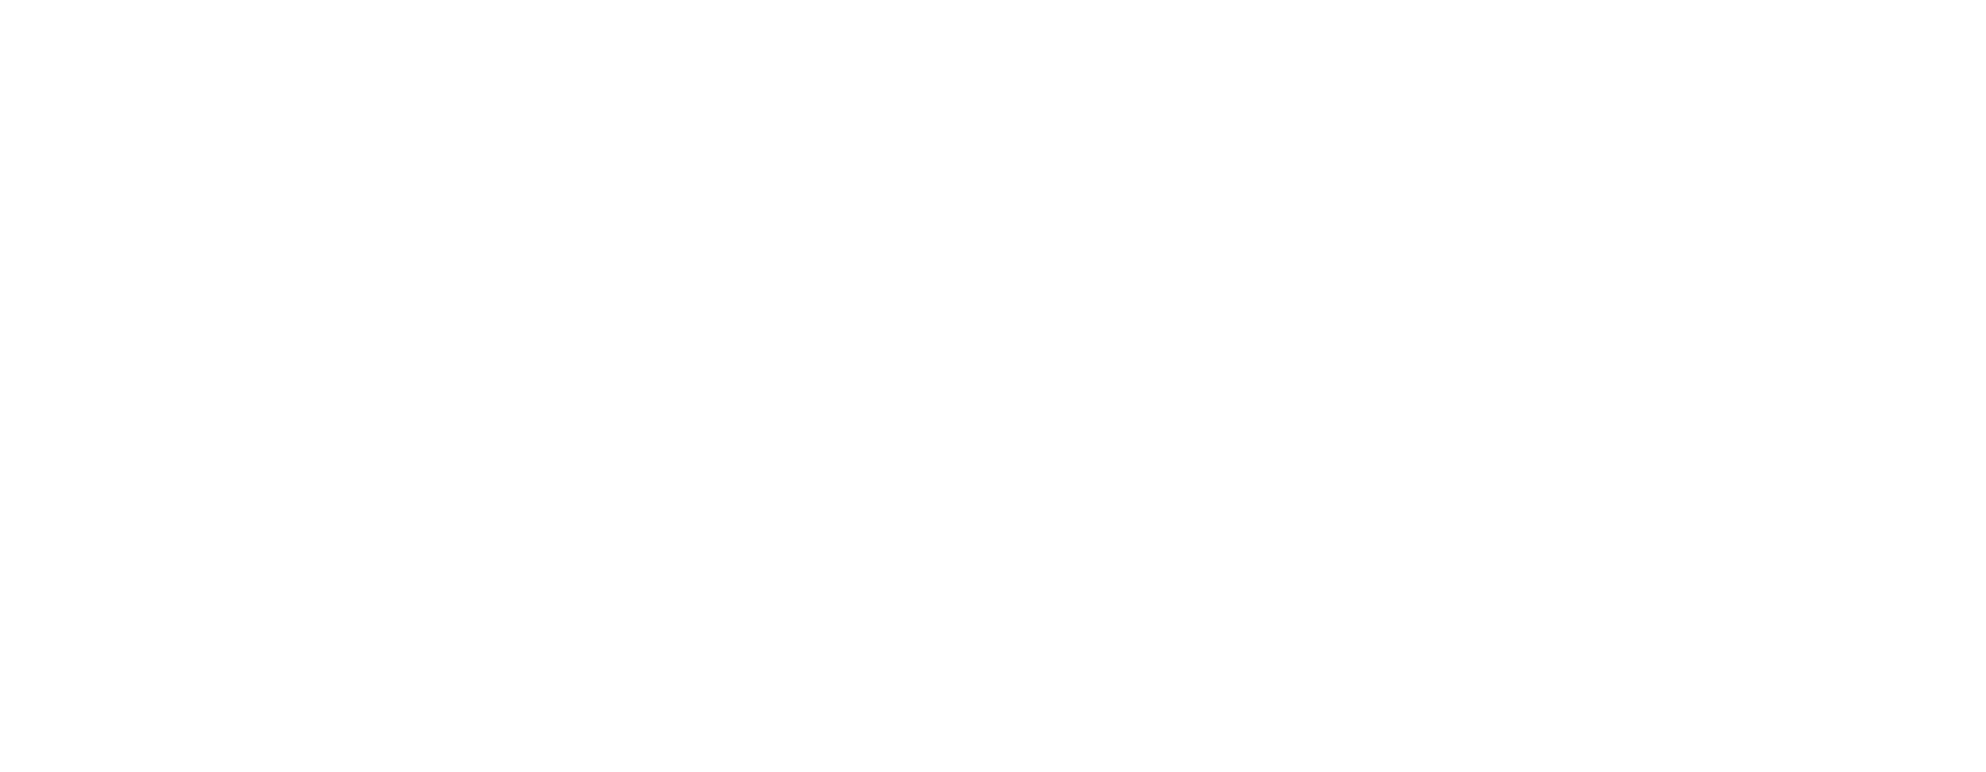 Echo Marine